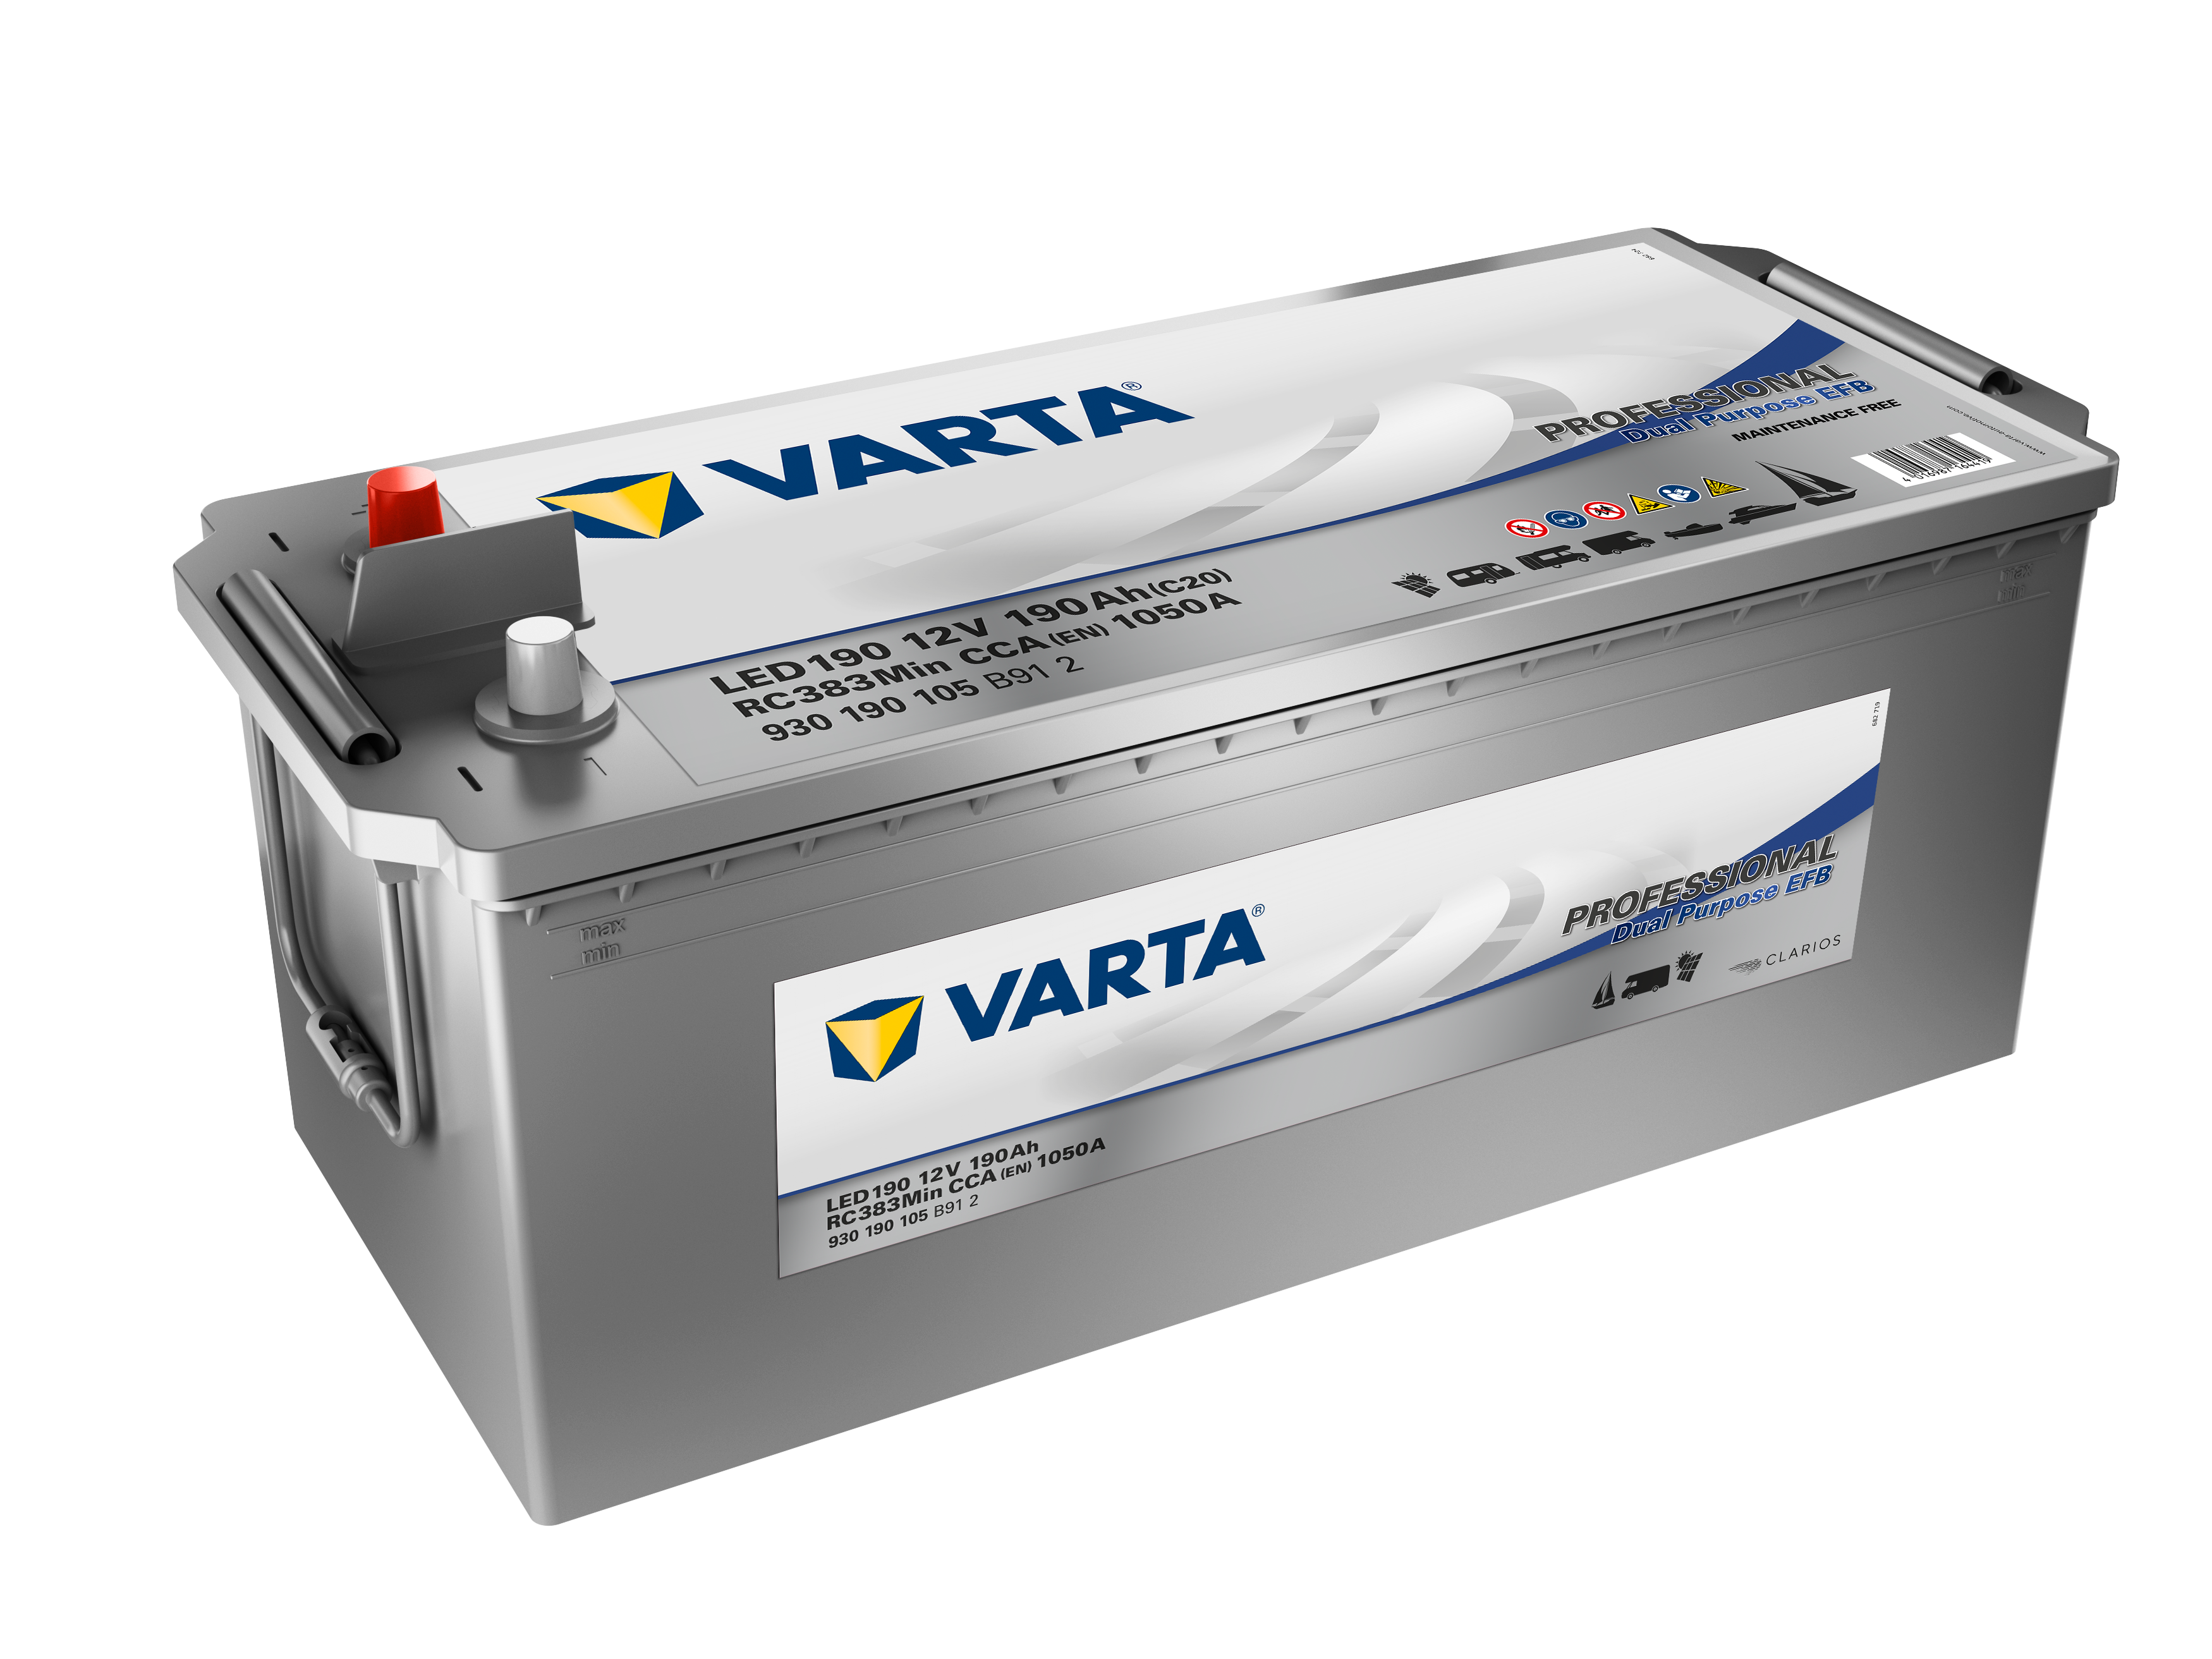 VARTA Professional Dual Purpose EFB batteri